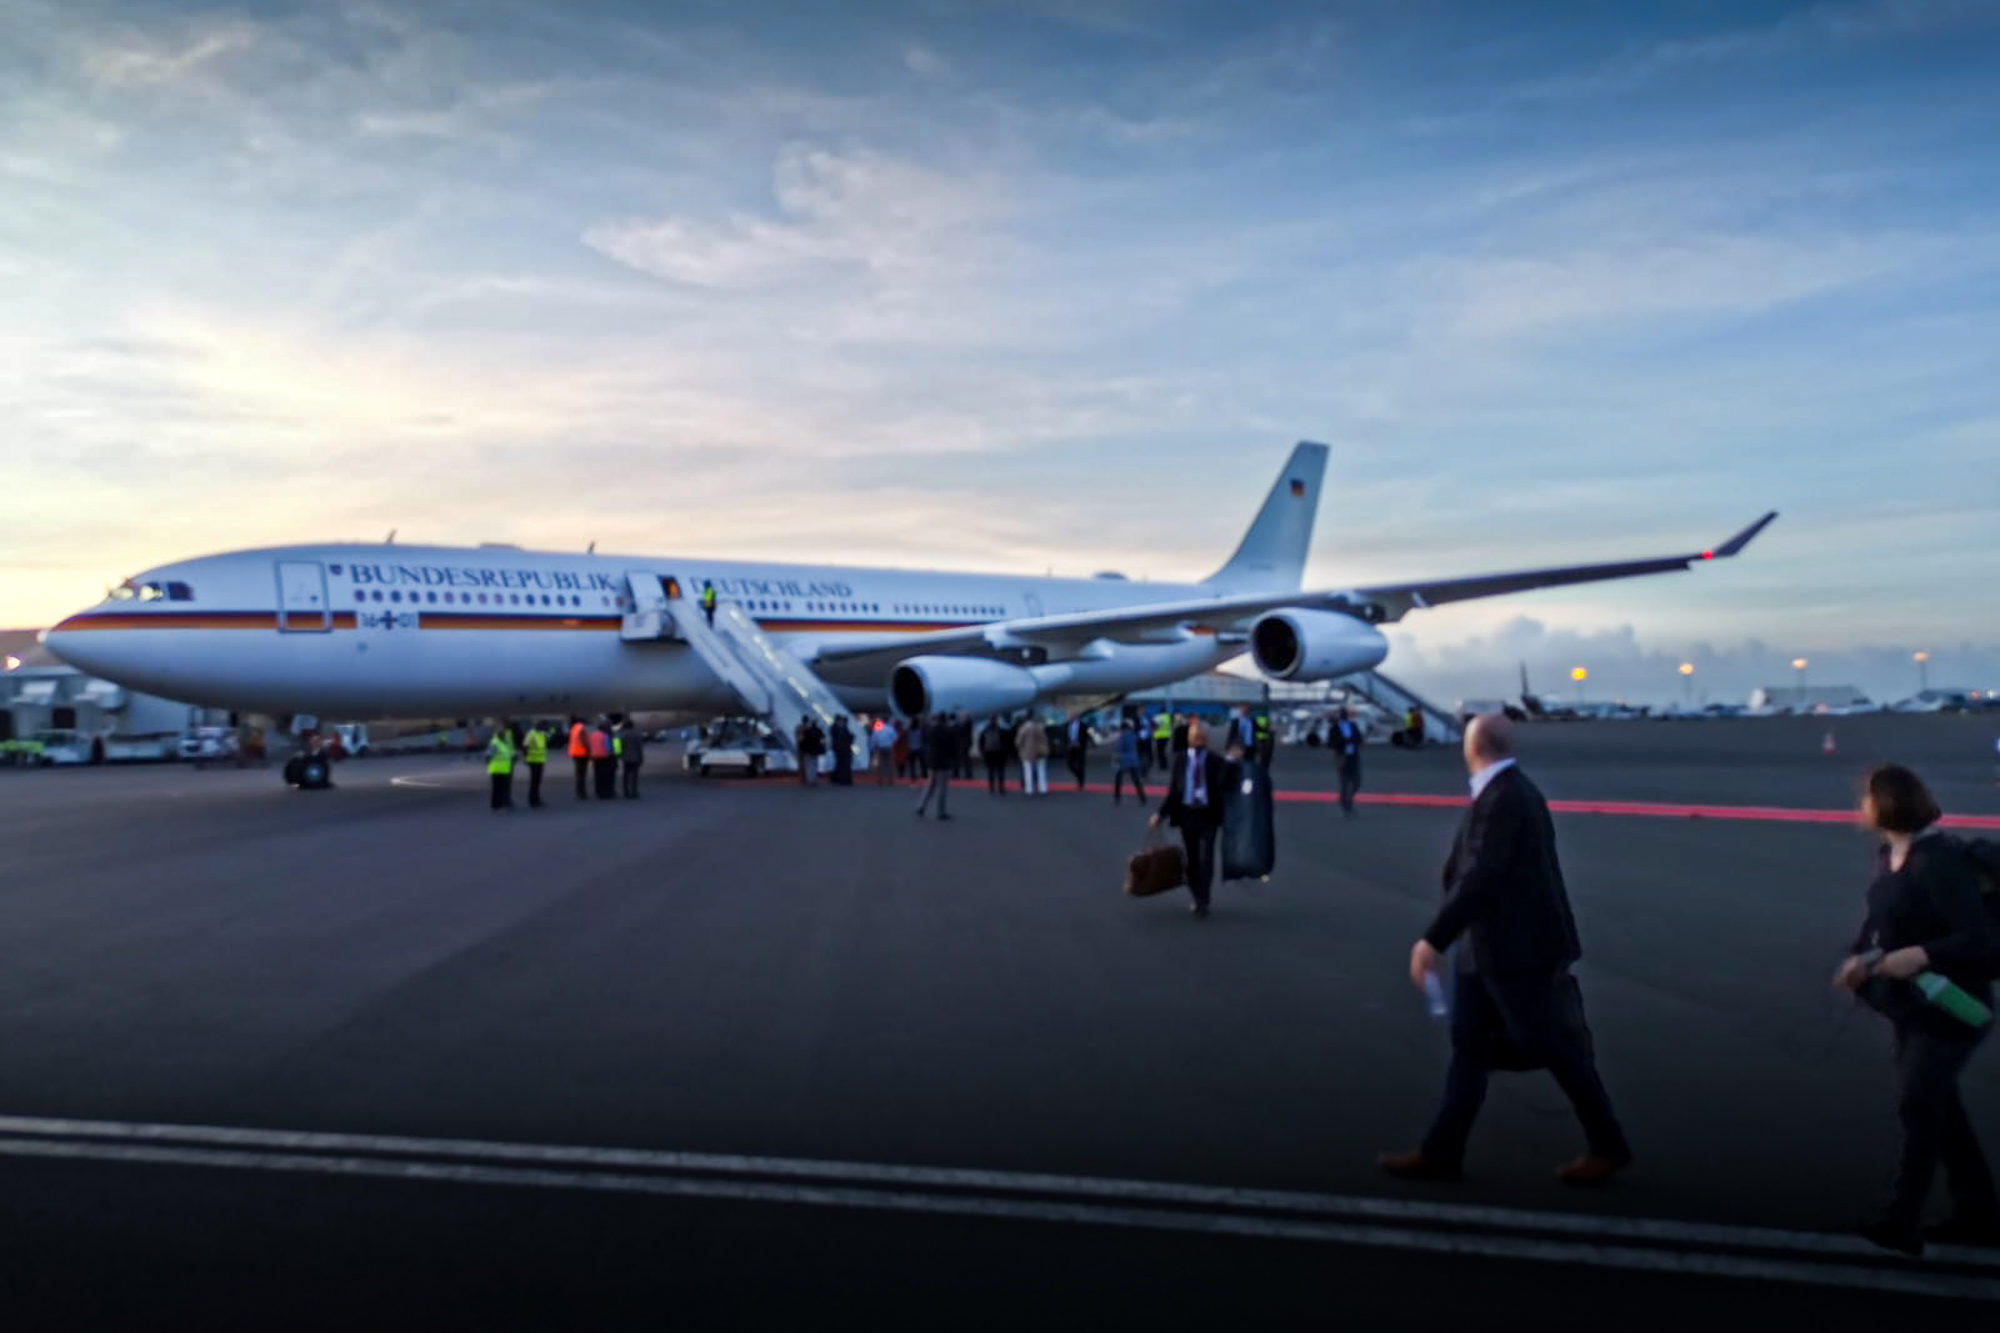 The arrival of the presidential plane at Jomo Kenyatta International Airport.